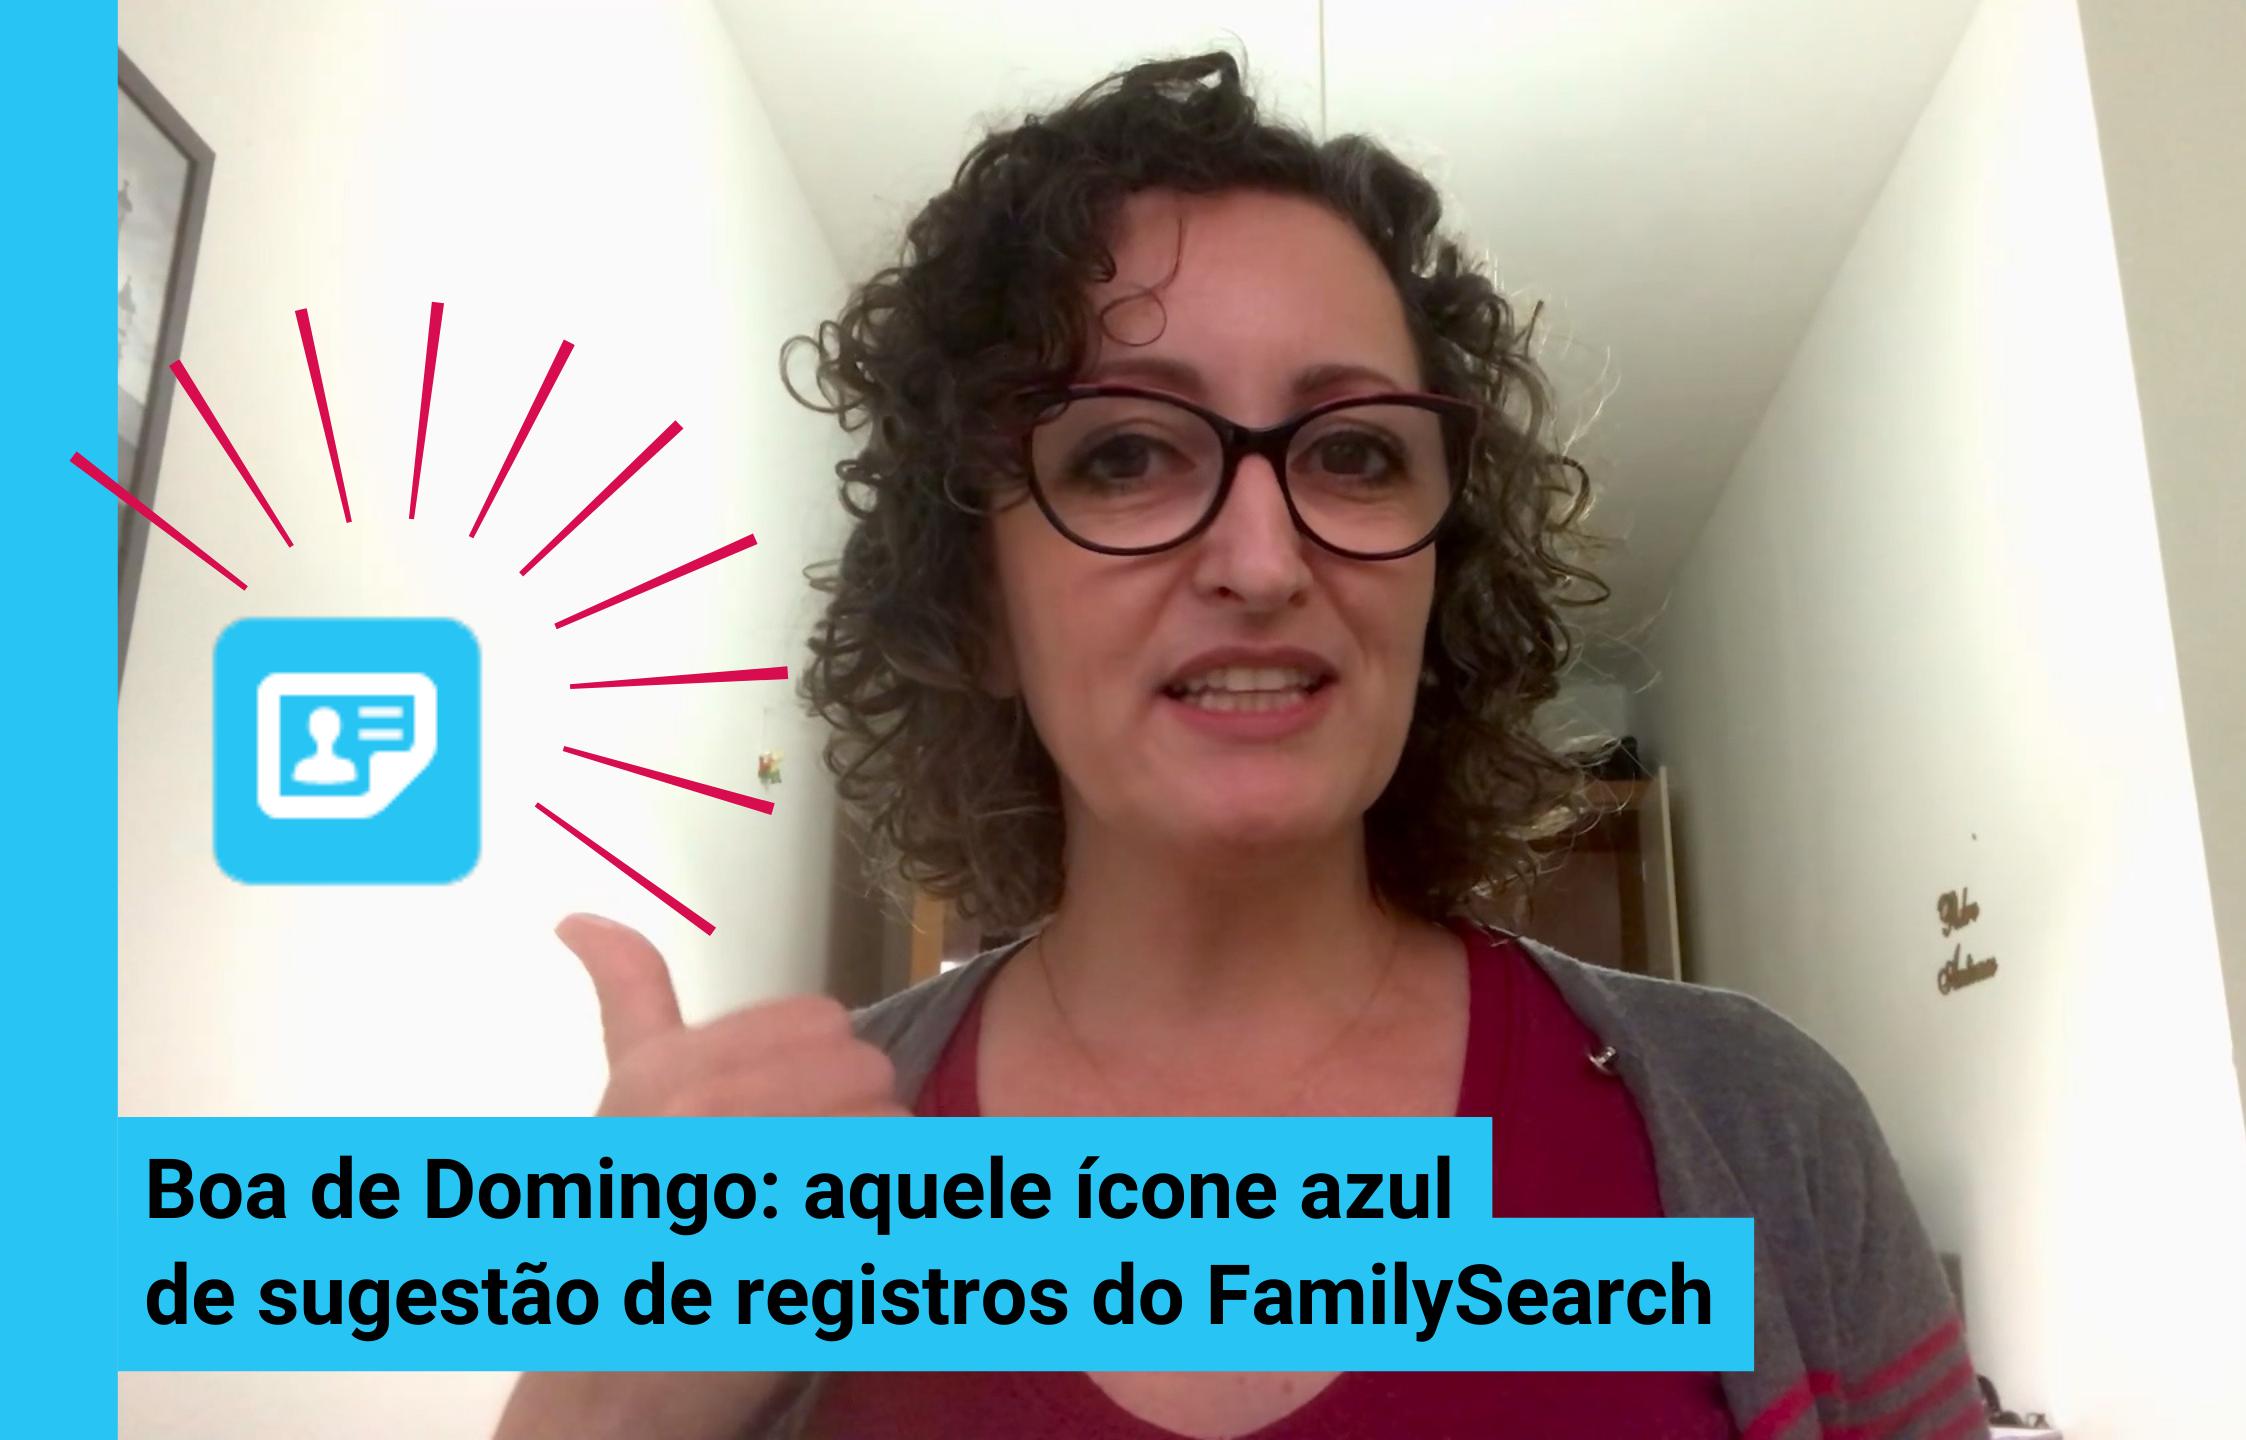 Featured image for “Vídeo: O ícone azul de registros sugeridos do FamilySearch | Boa de Domingo”